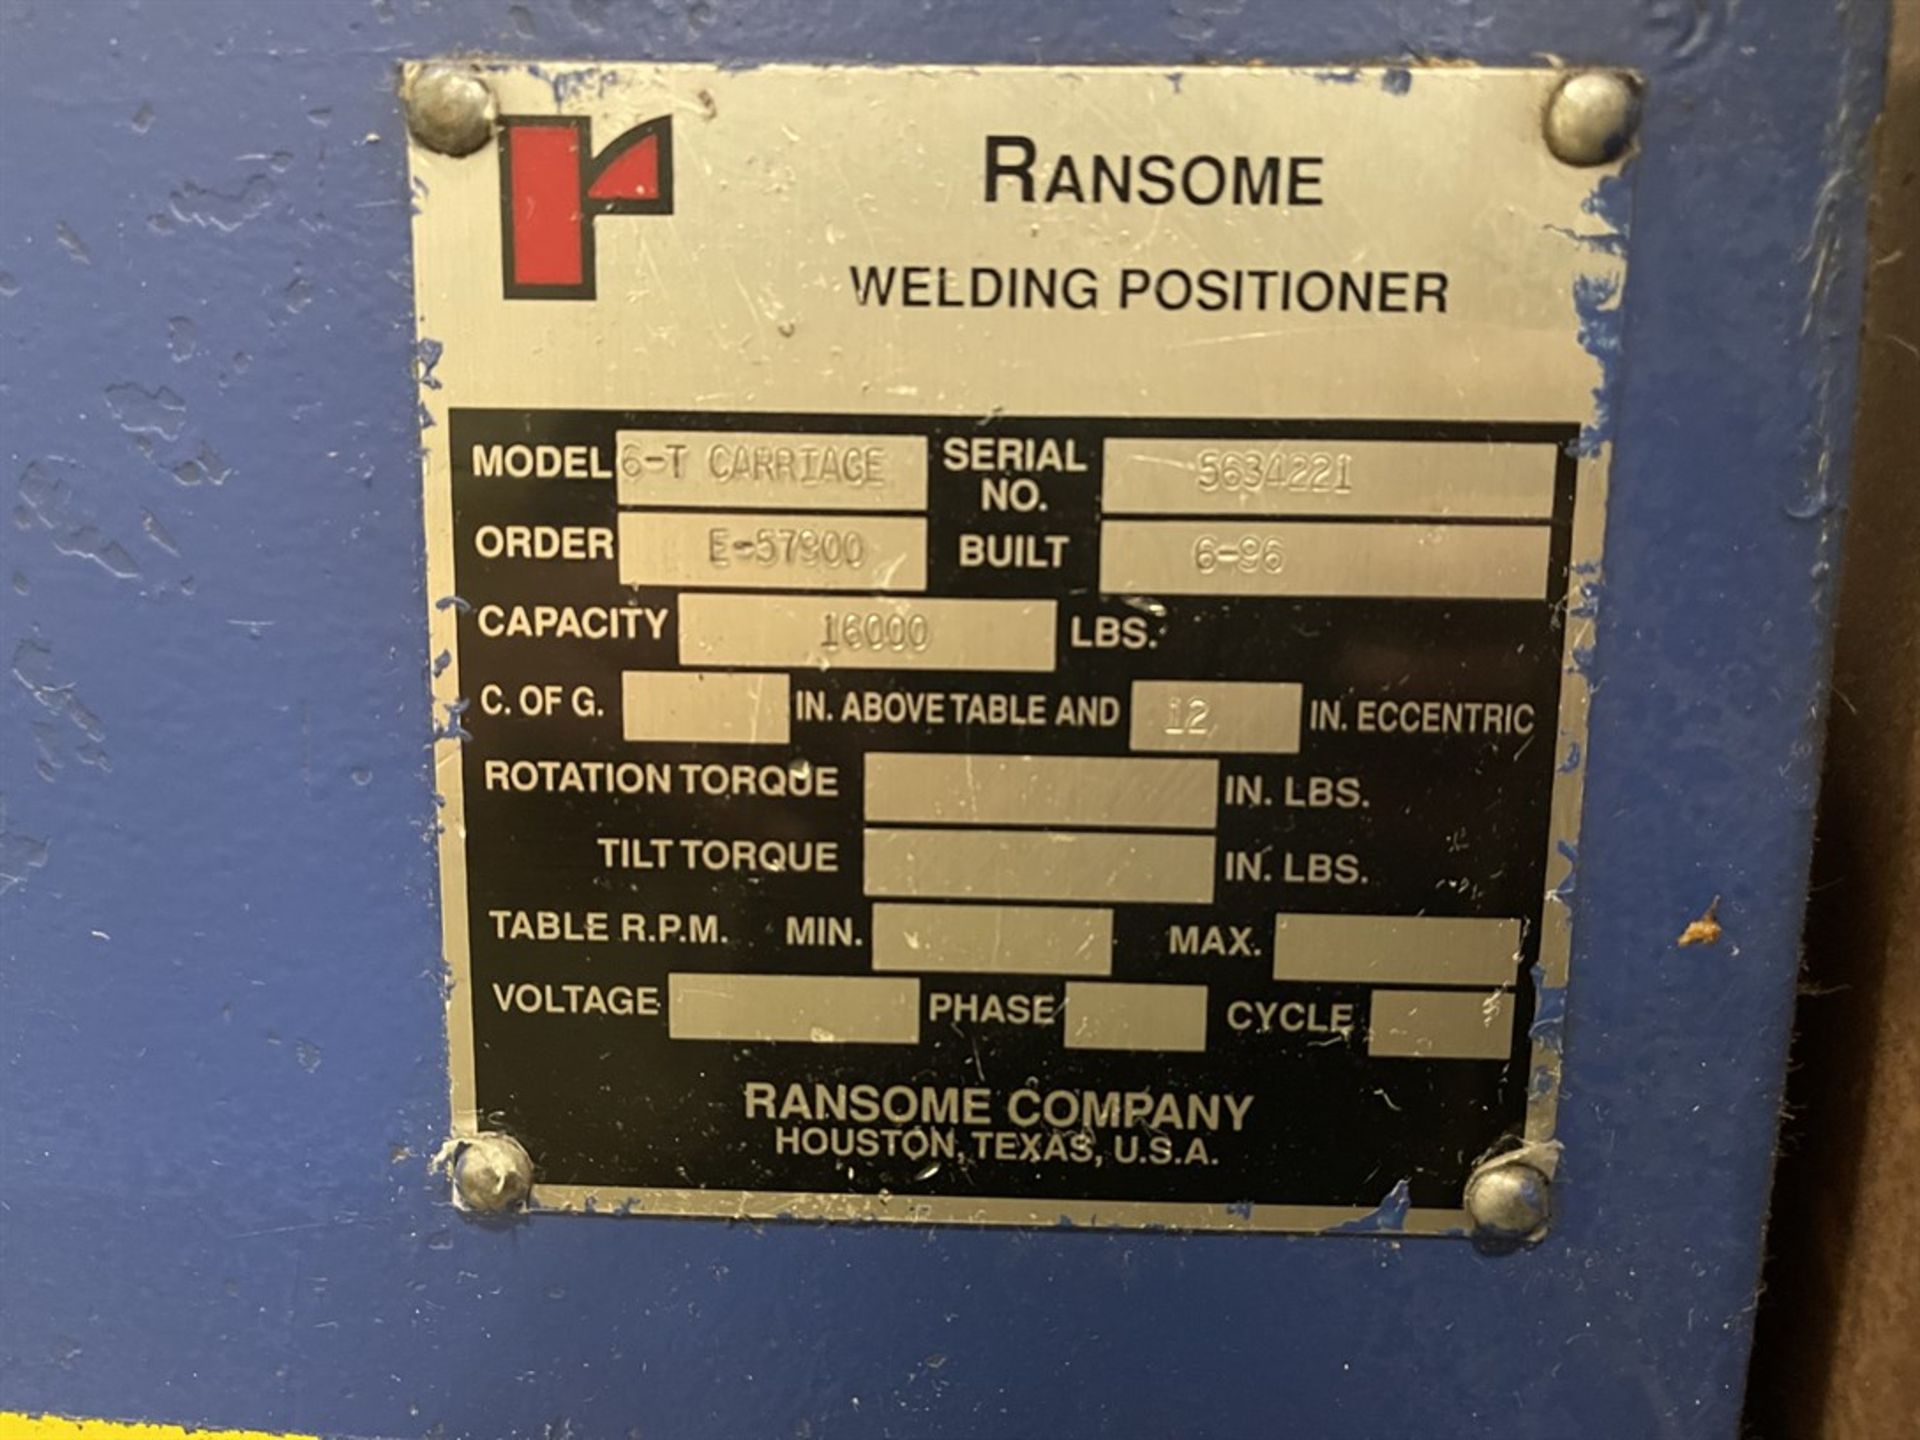 RANSOME 6-T/6-H 16,000 lb. Headstock/Tailstock Welding Positioner, s/n 5634221, 5534217, (7L) - Bild 4 aus 6